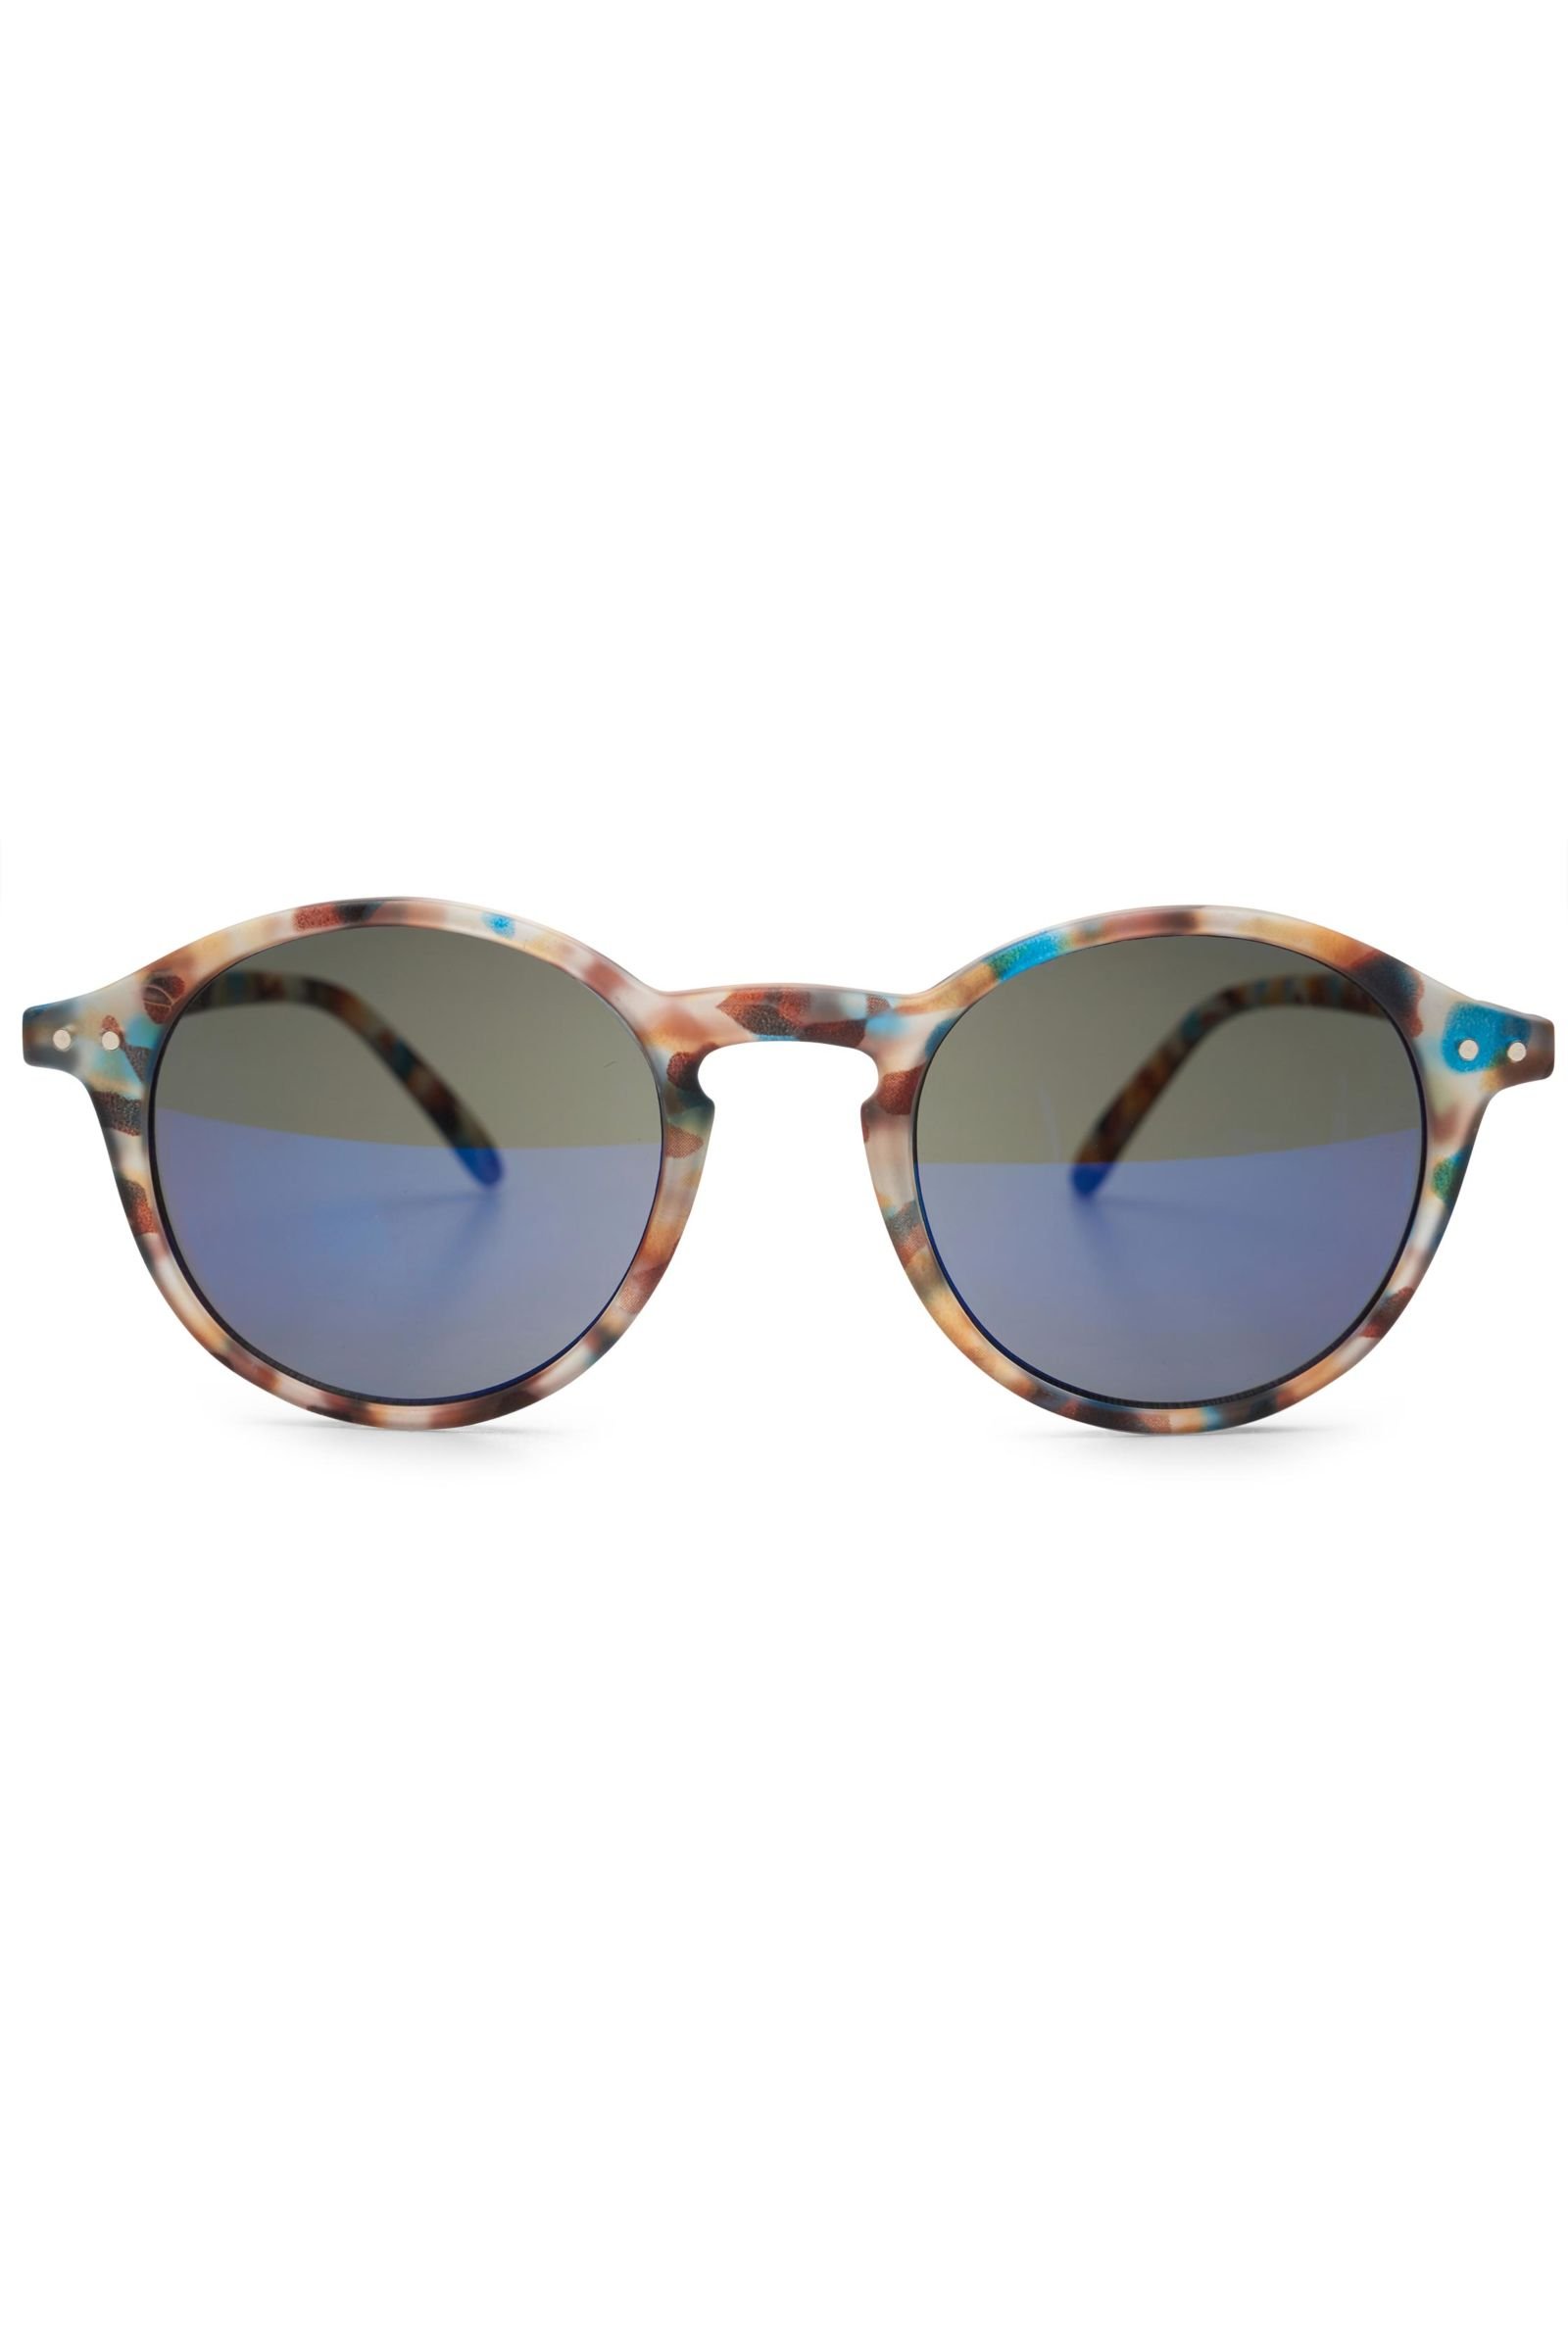 Sunglasses '#D Sun' brown patterned/blue